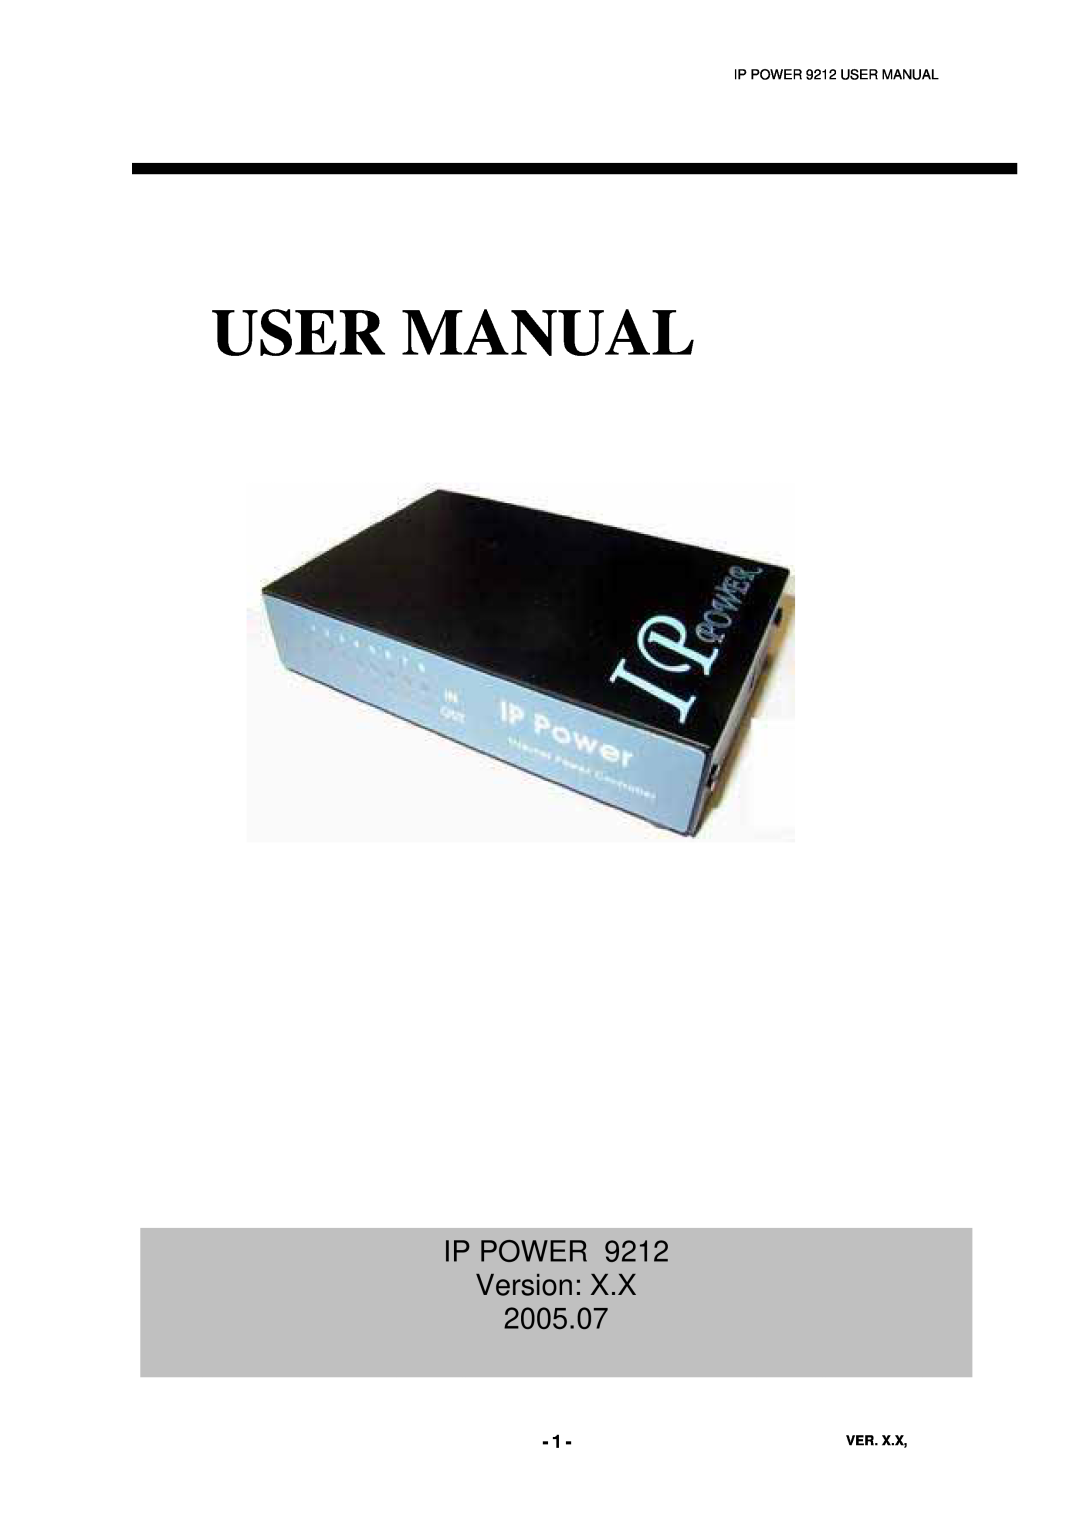 New Media Technology manual User Manual, IP POWER Version 2005.07, IP POWER 9212 USER MANUAL 